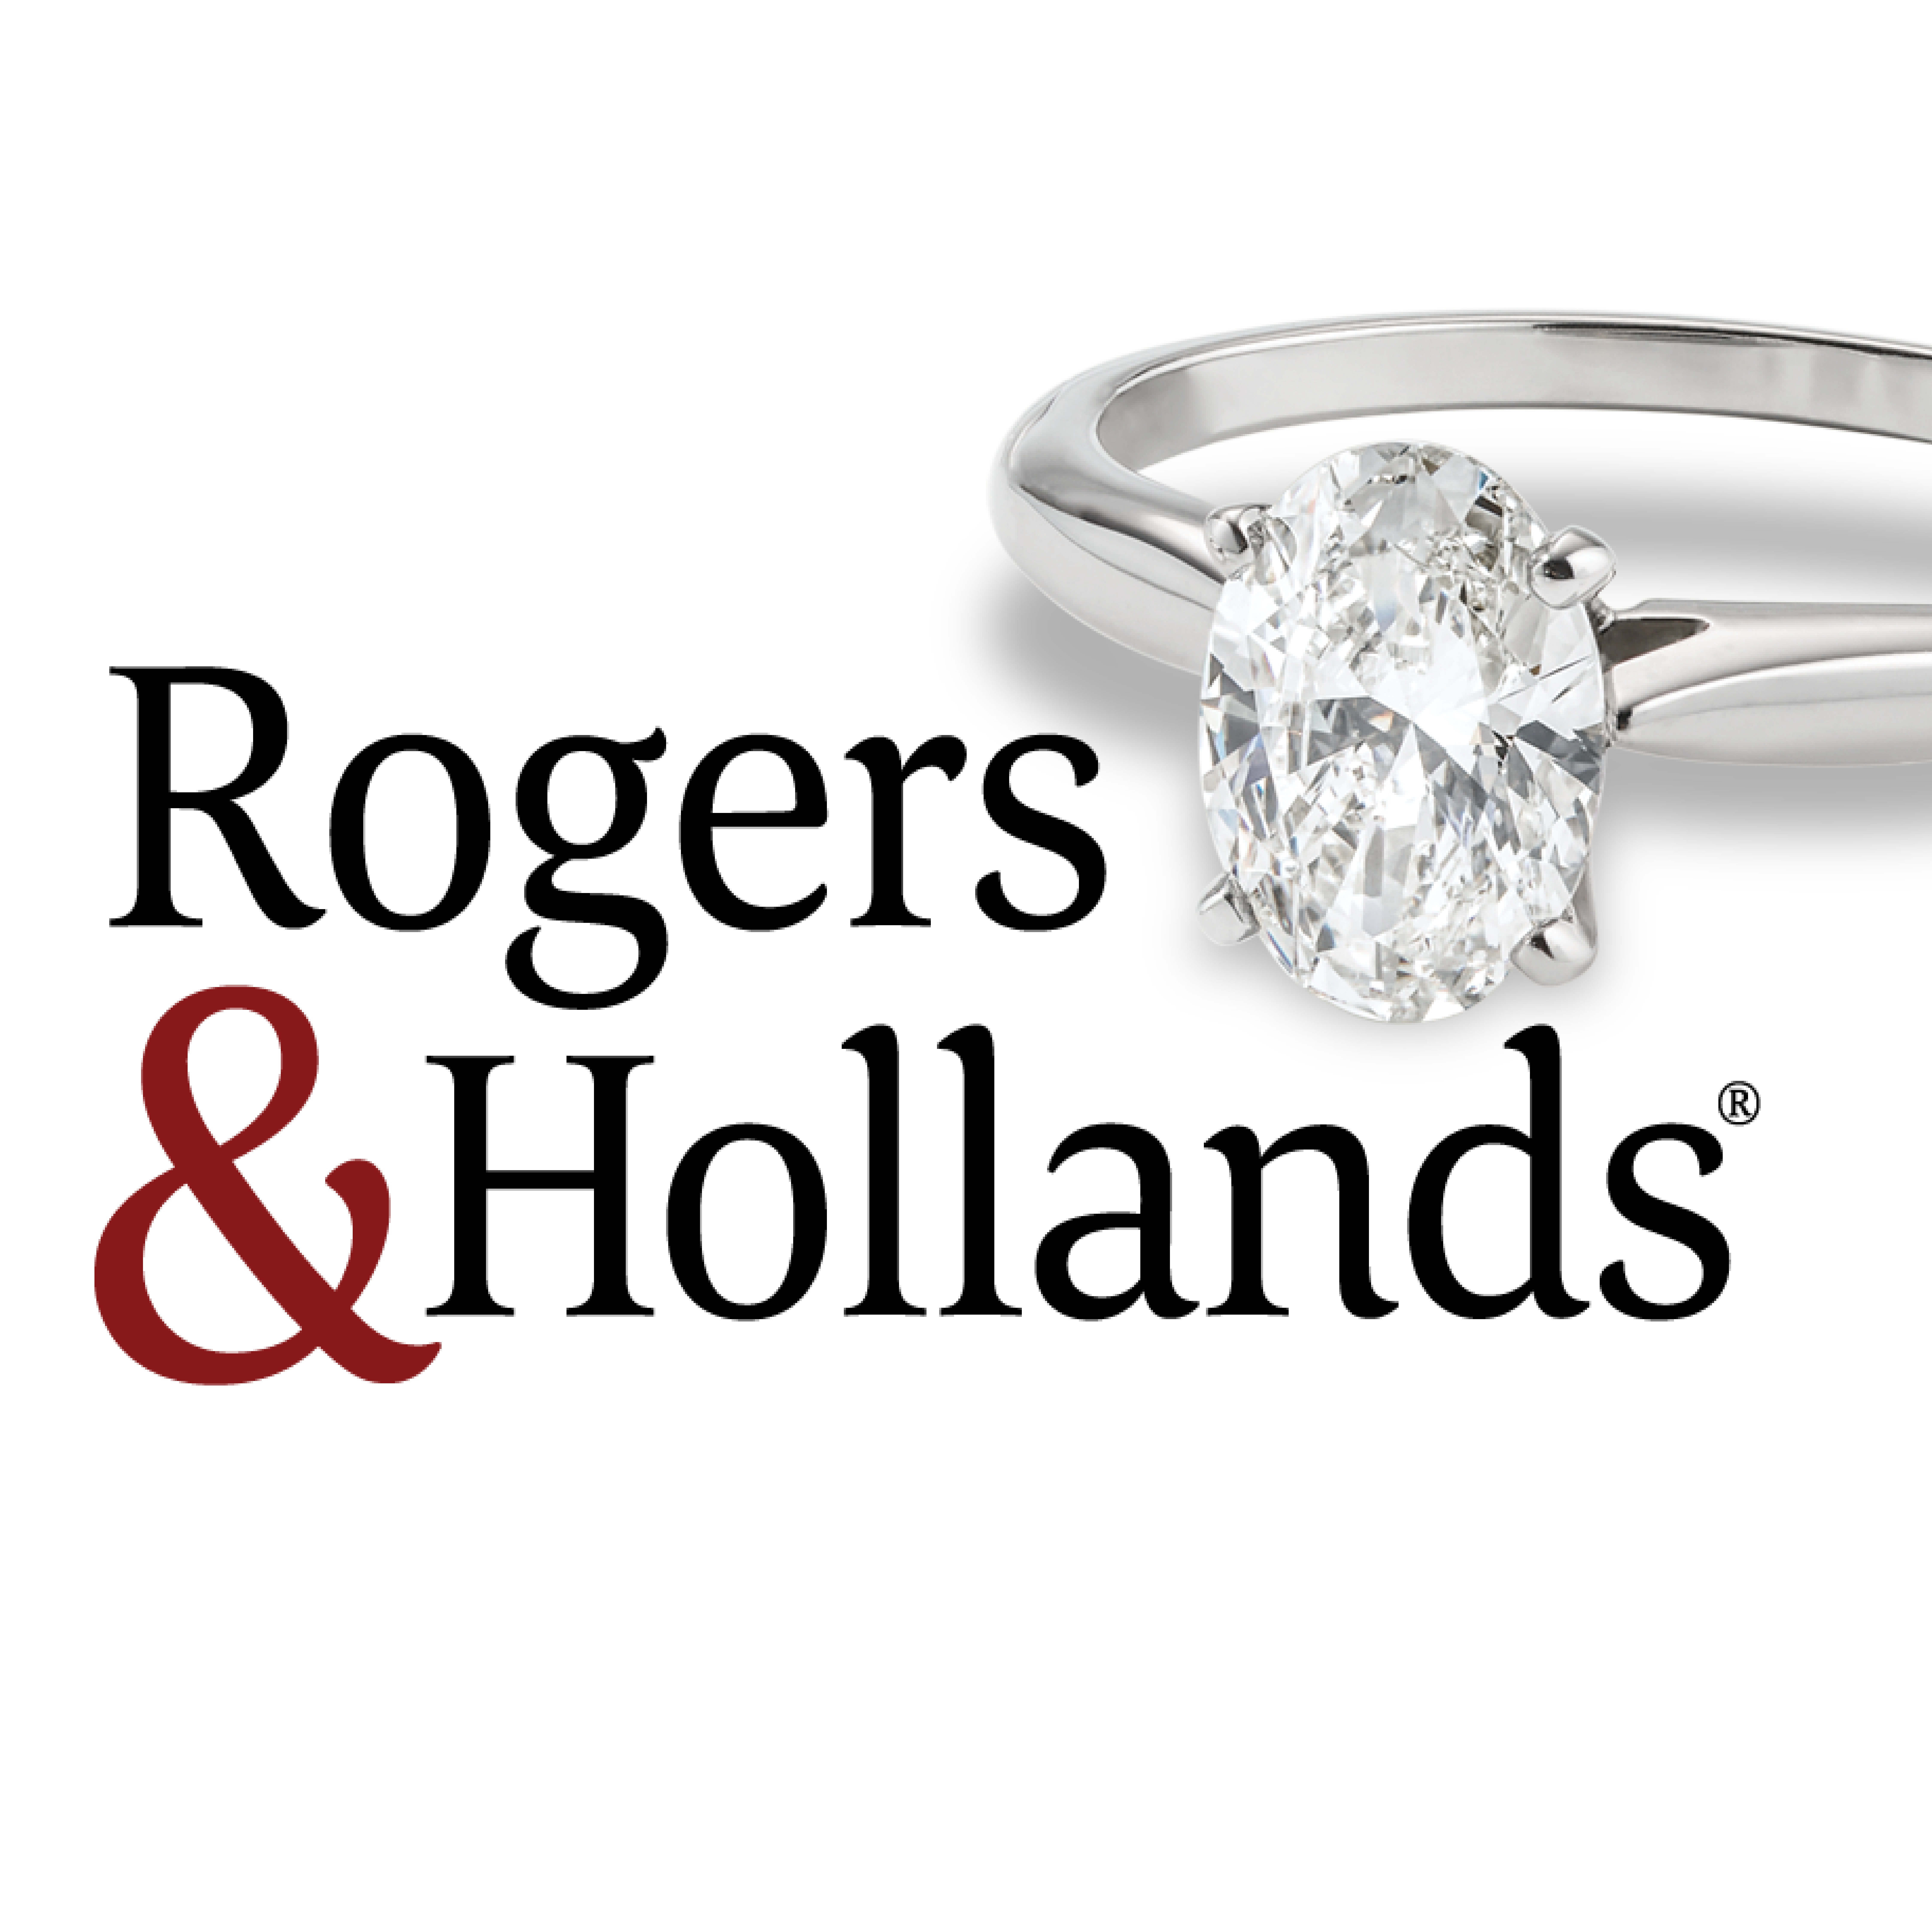 Rogers & Hollands® Jewelers Logo